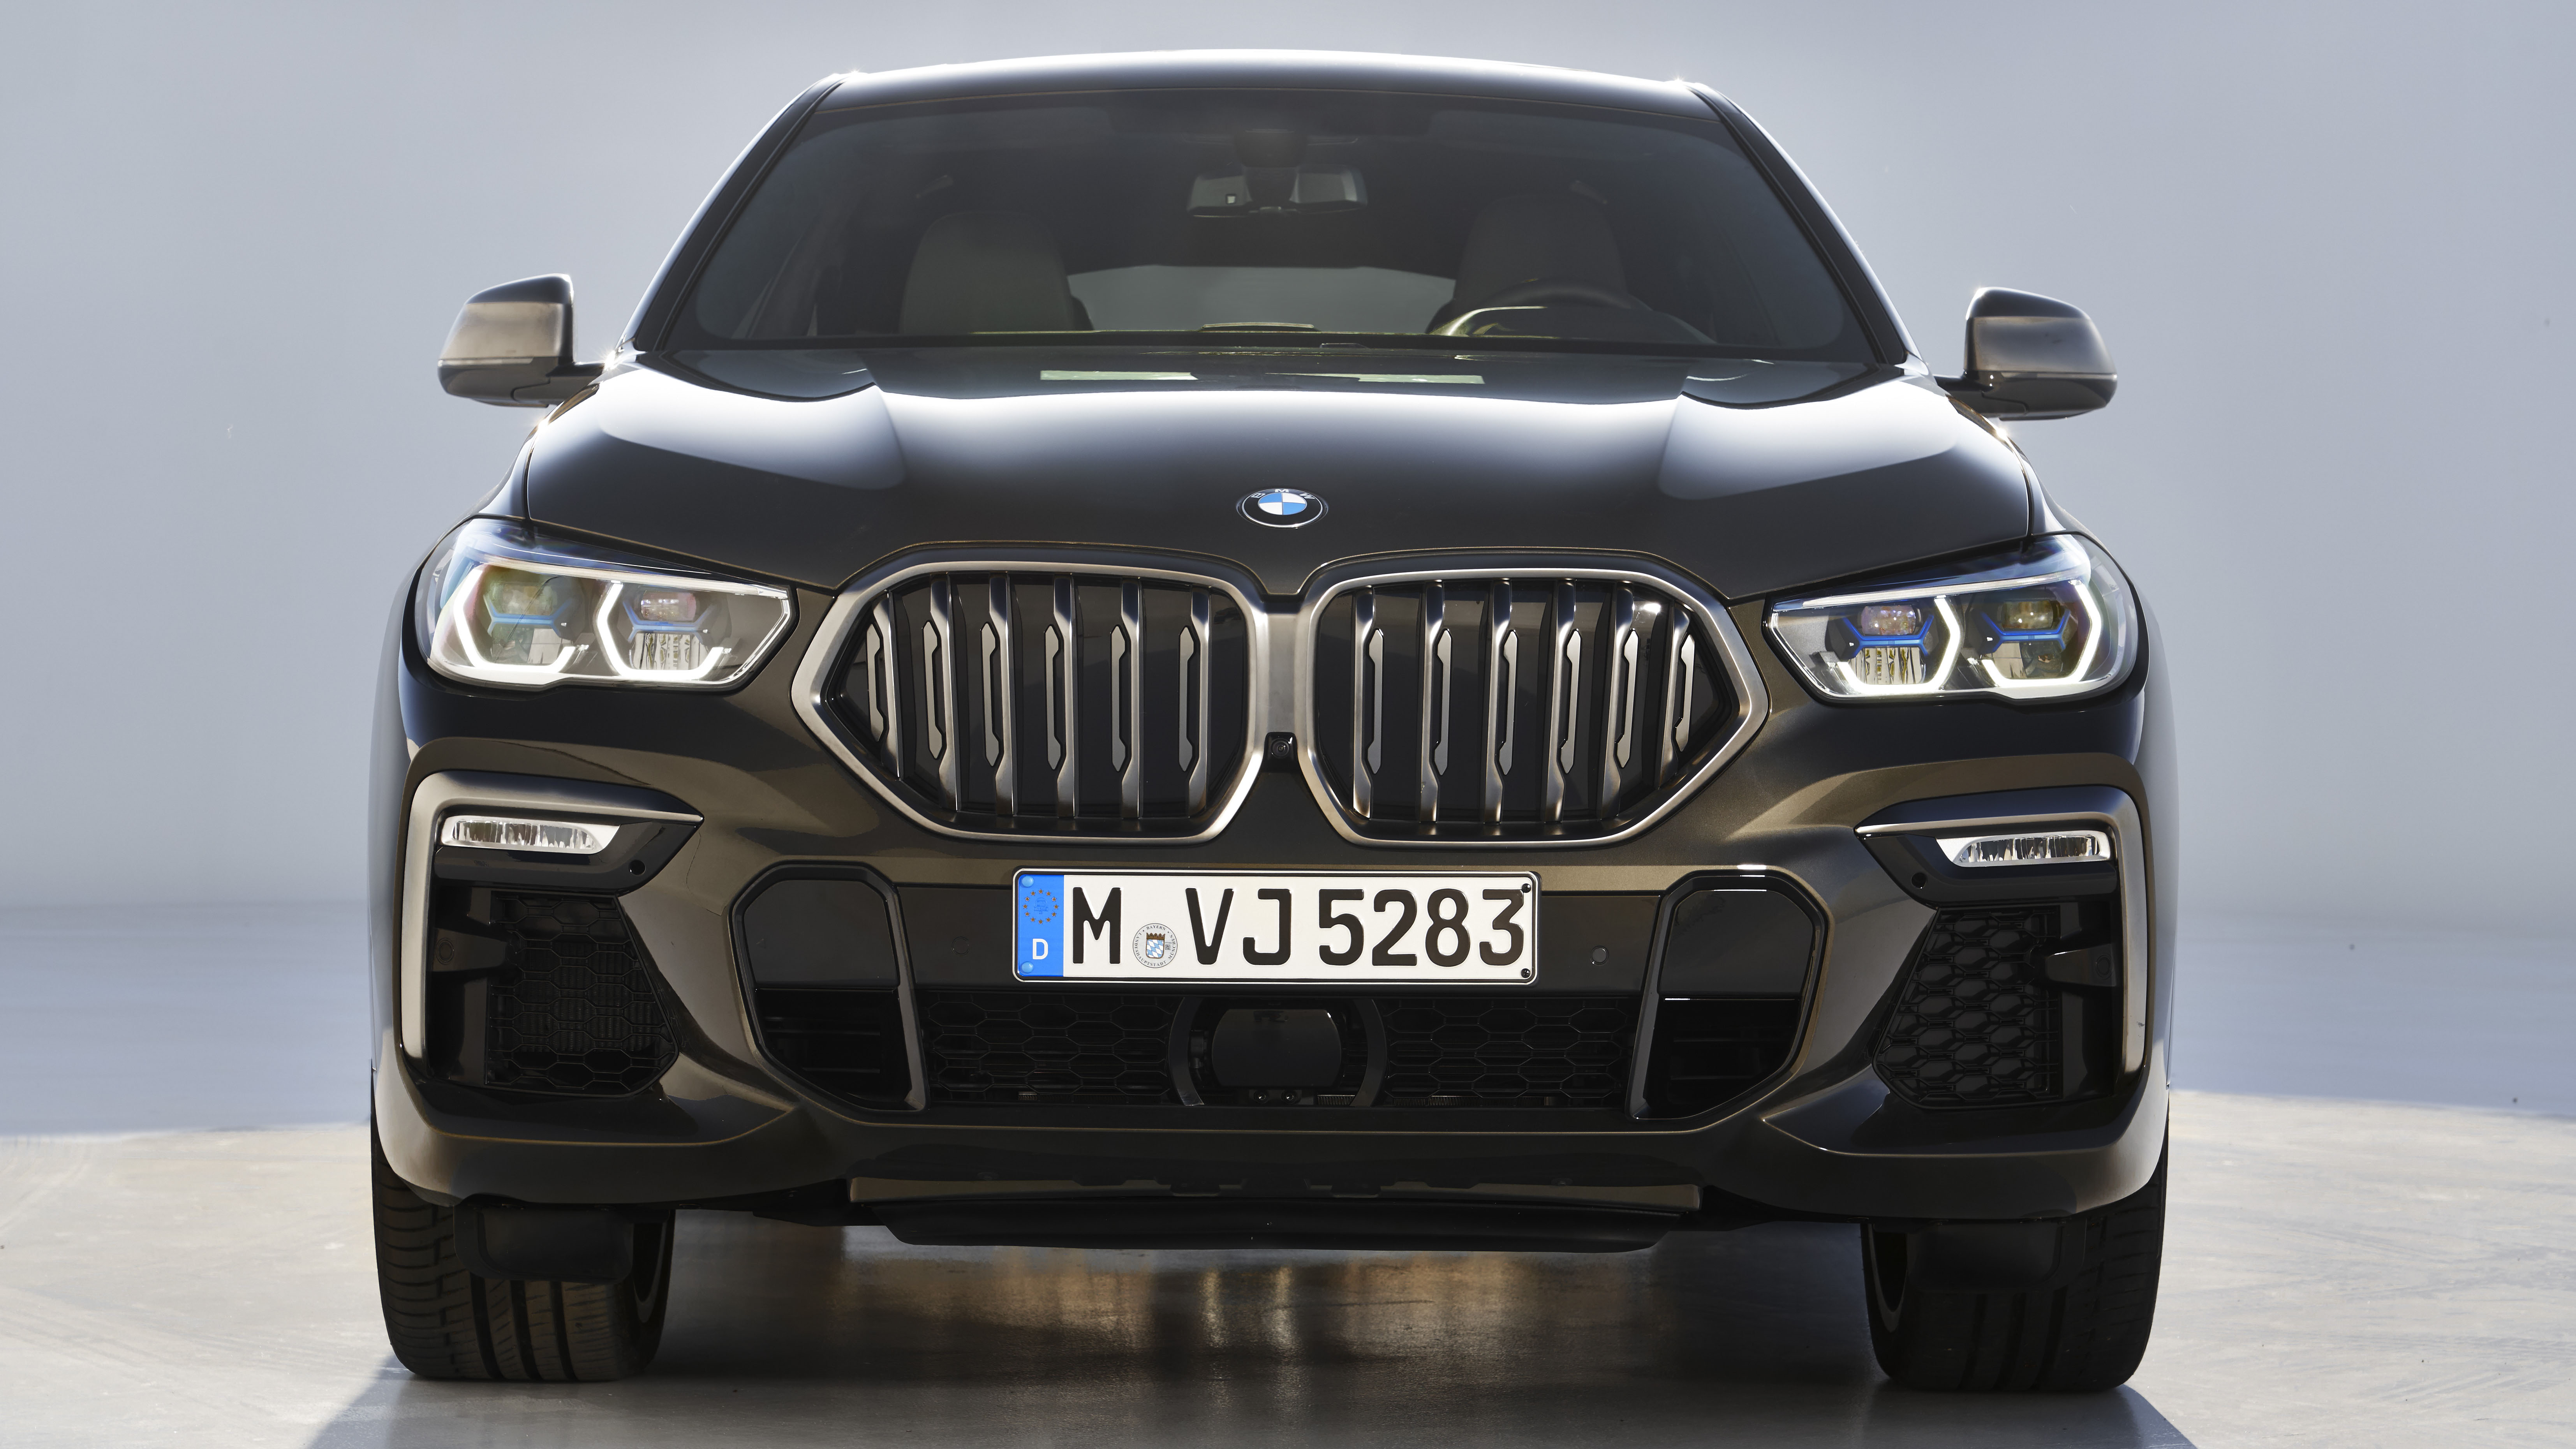 BMW X6 (G06) exterior model